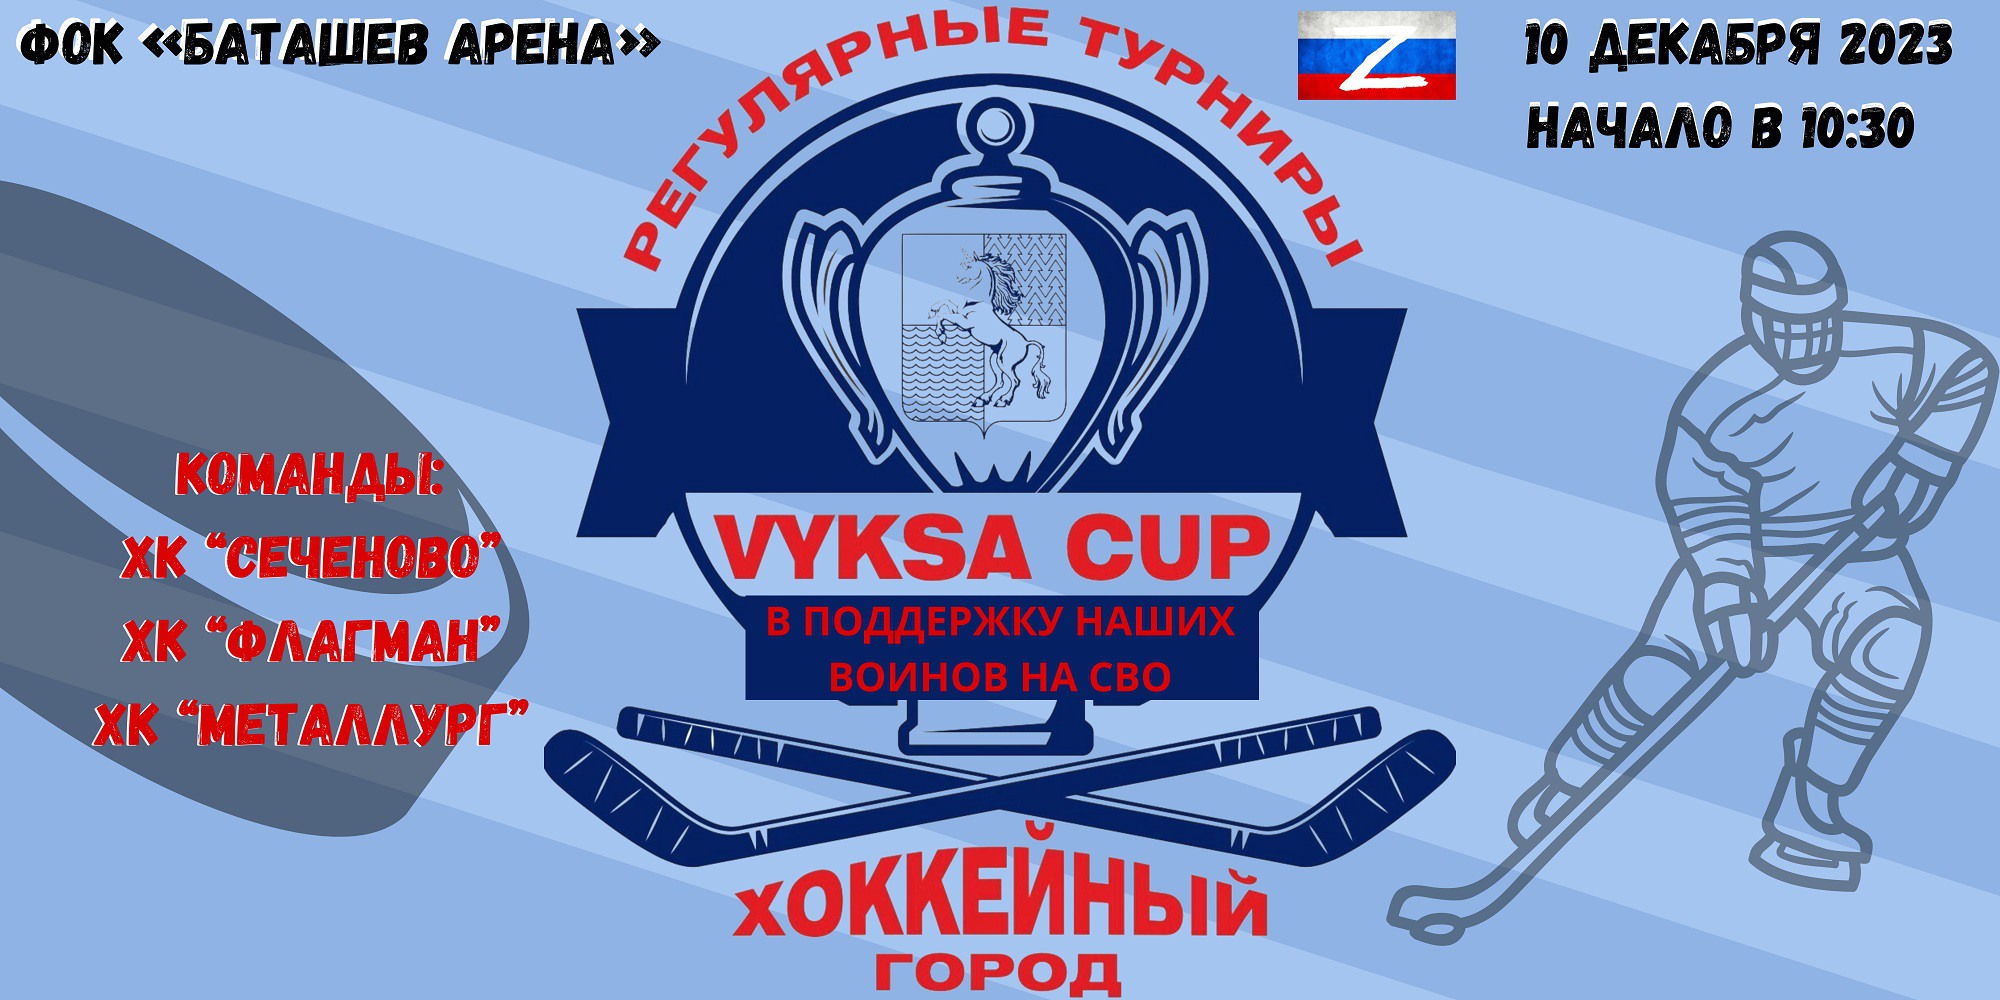 Детский хоккейный турнир Vyksa Cup